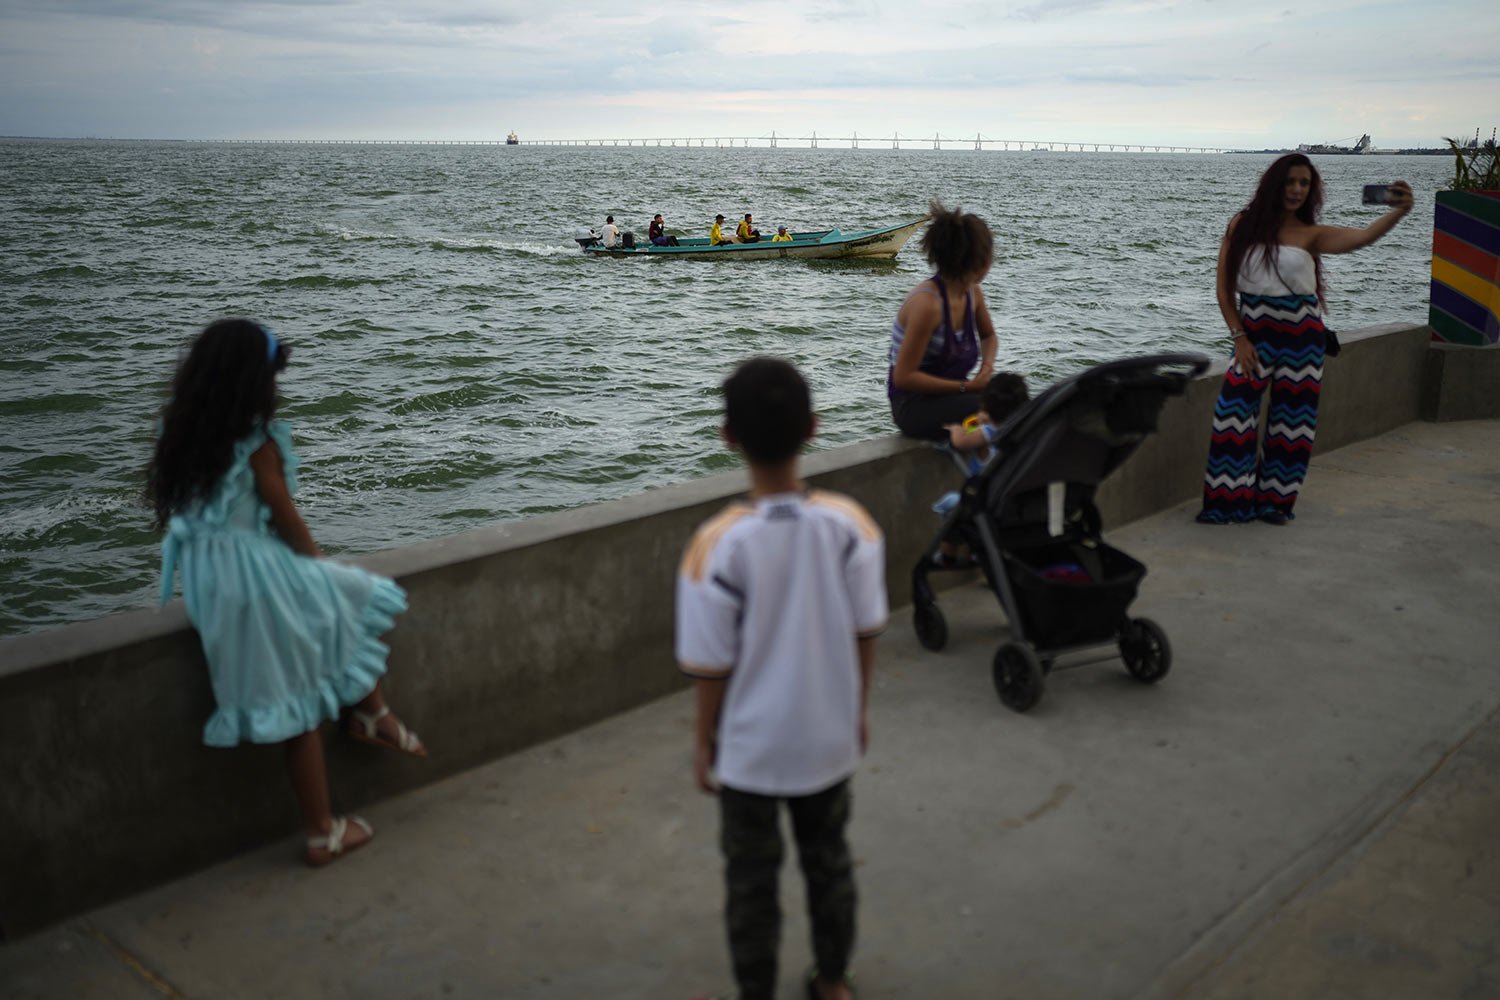  Residents gather on a seawall as passengers ride a boat on Lake Maracaibo, in Maracaibo, Venezuela, Aug. 10, 2023. (AP Photo/Ariana Cubillos) 